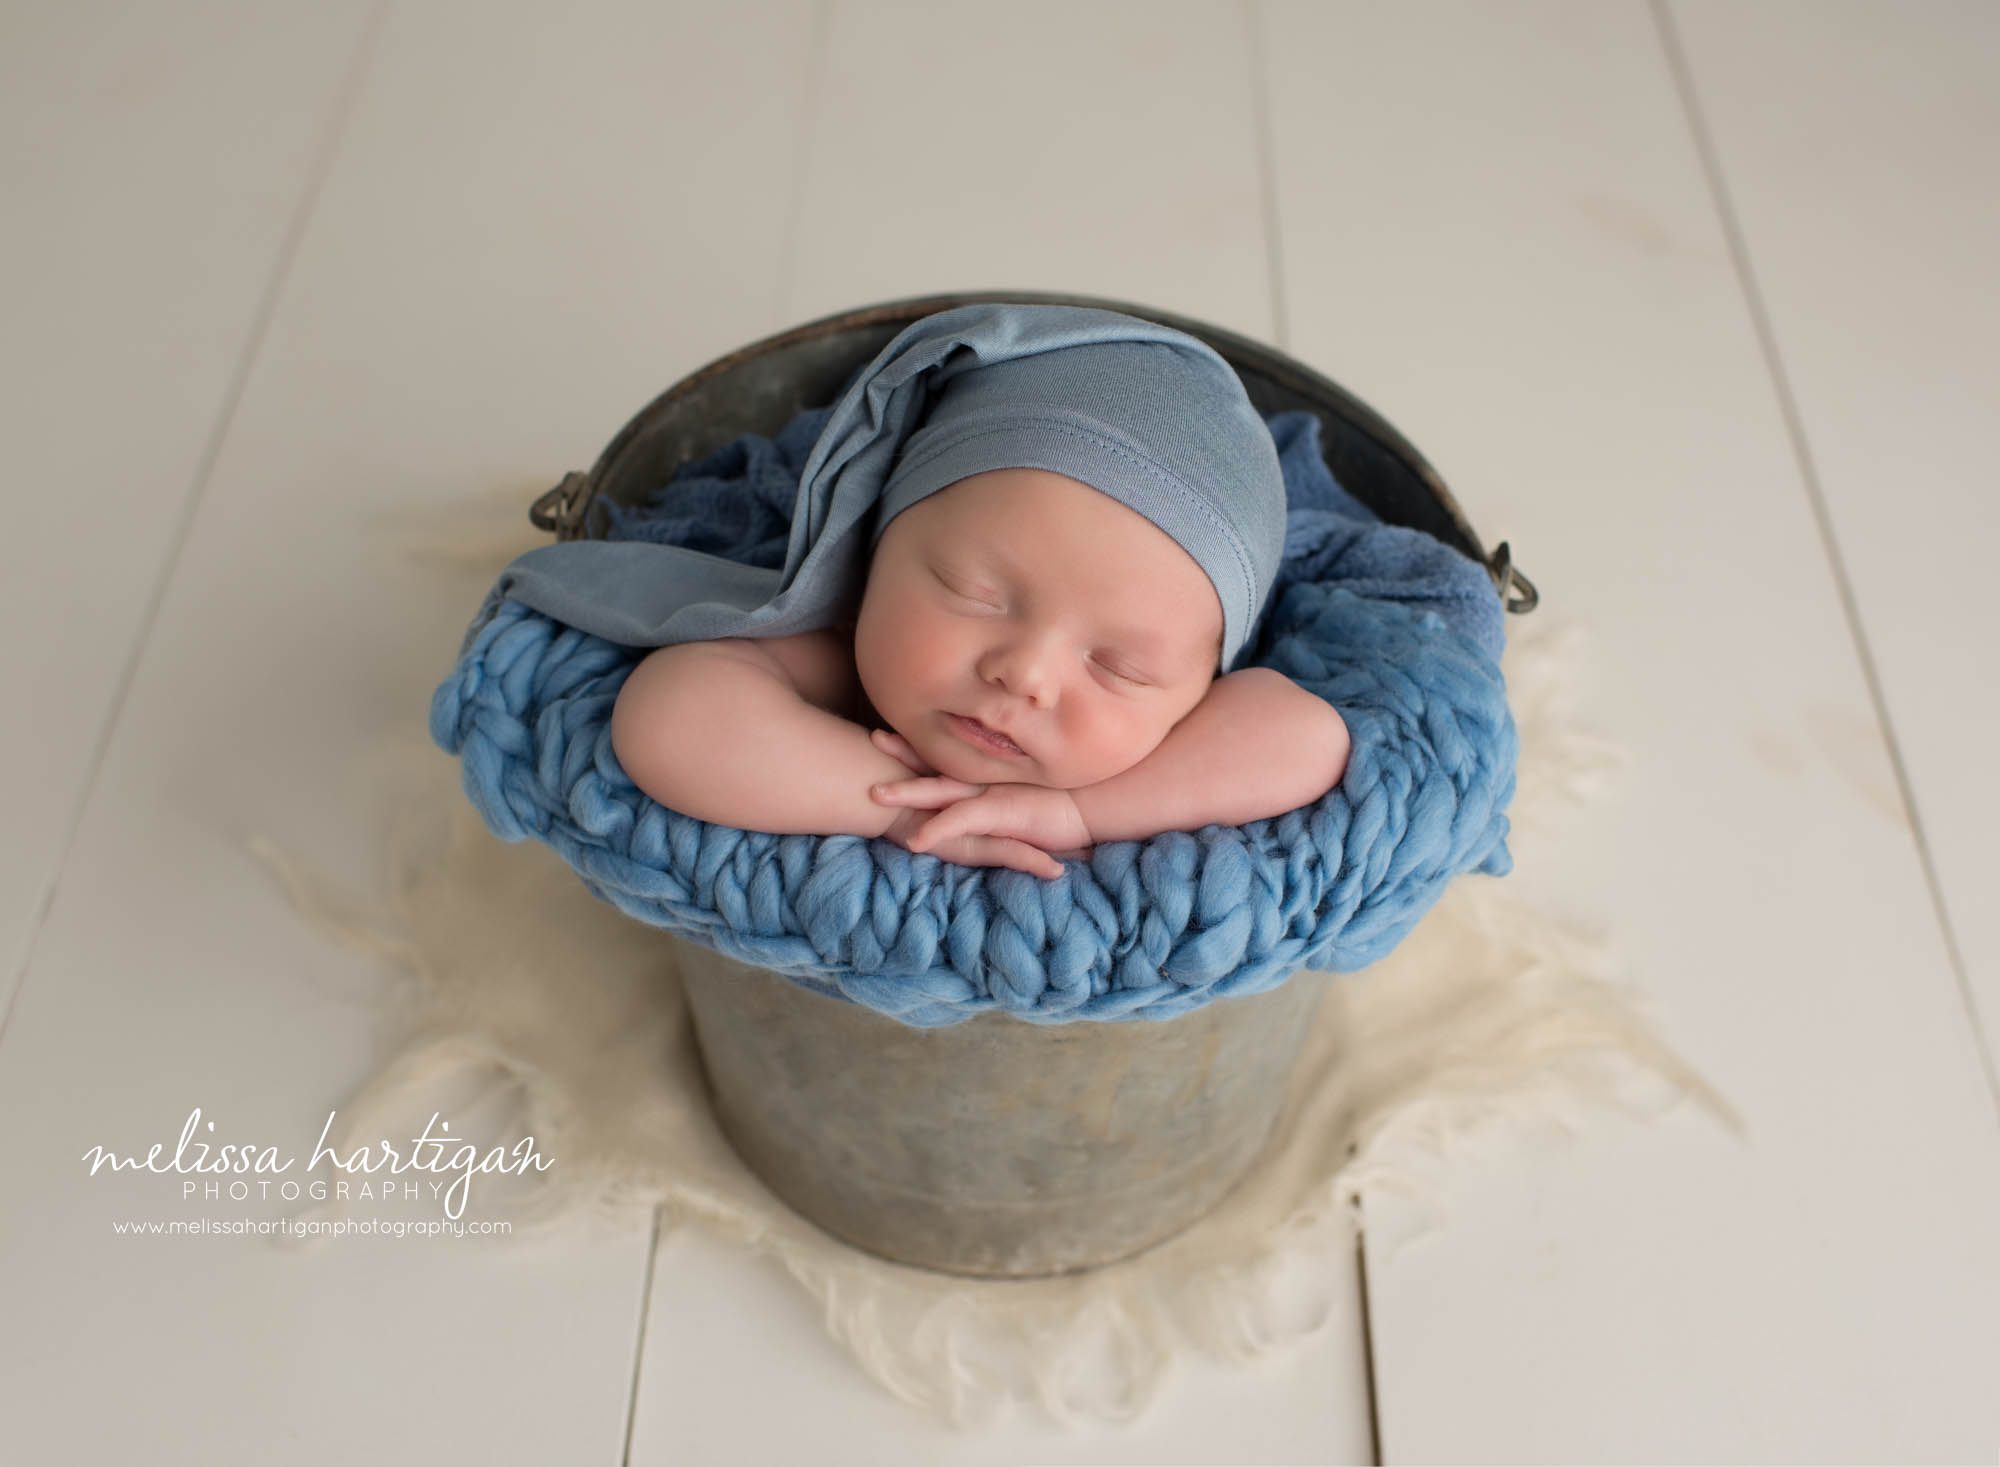 newborn baby boy pose din bucket wearing blue sleepy cap twin newborn photography CT